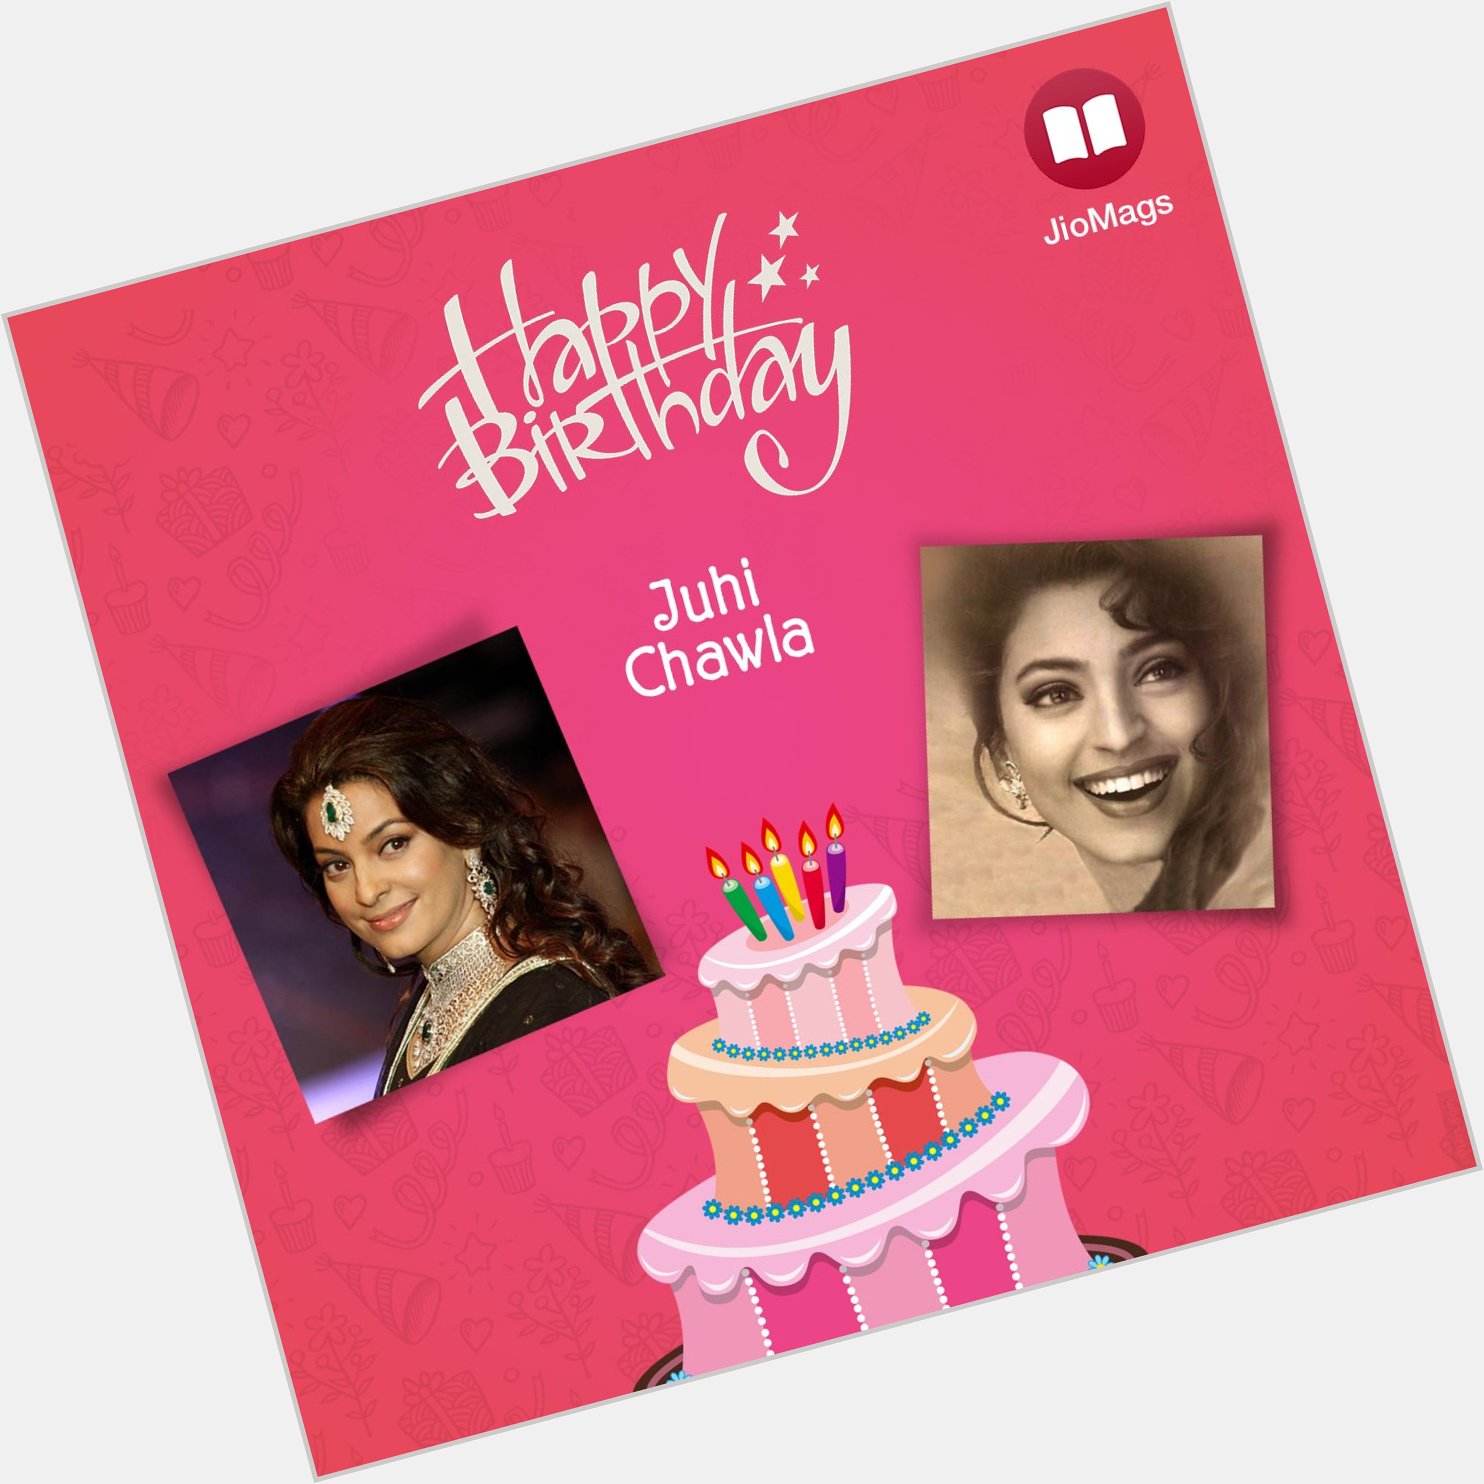 JioMags wishes Juhi Chawla a very Happy Birthday   